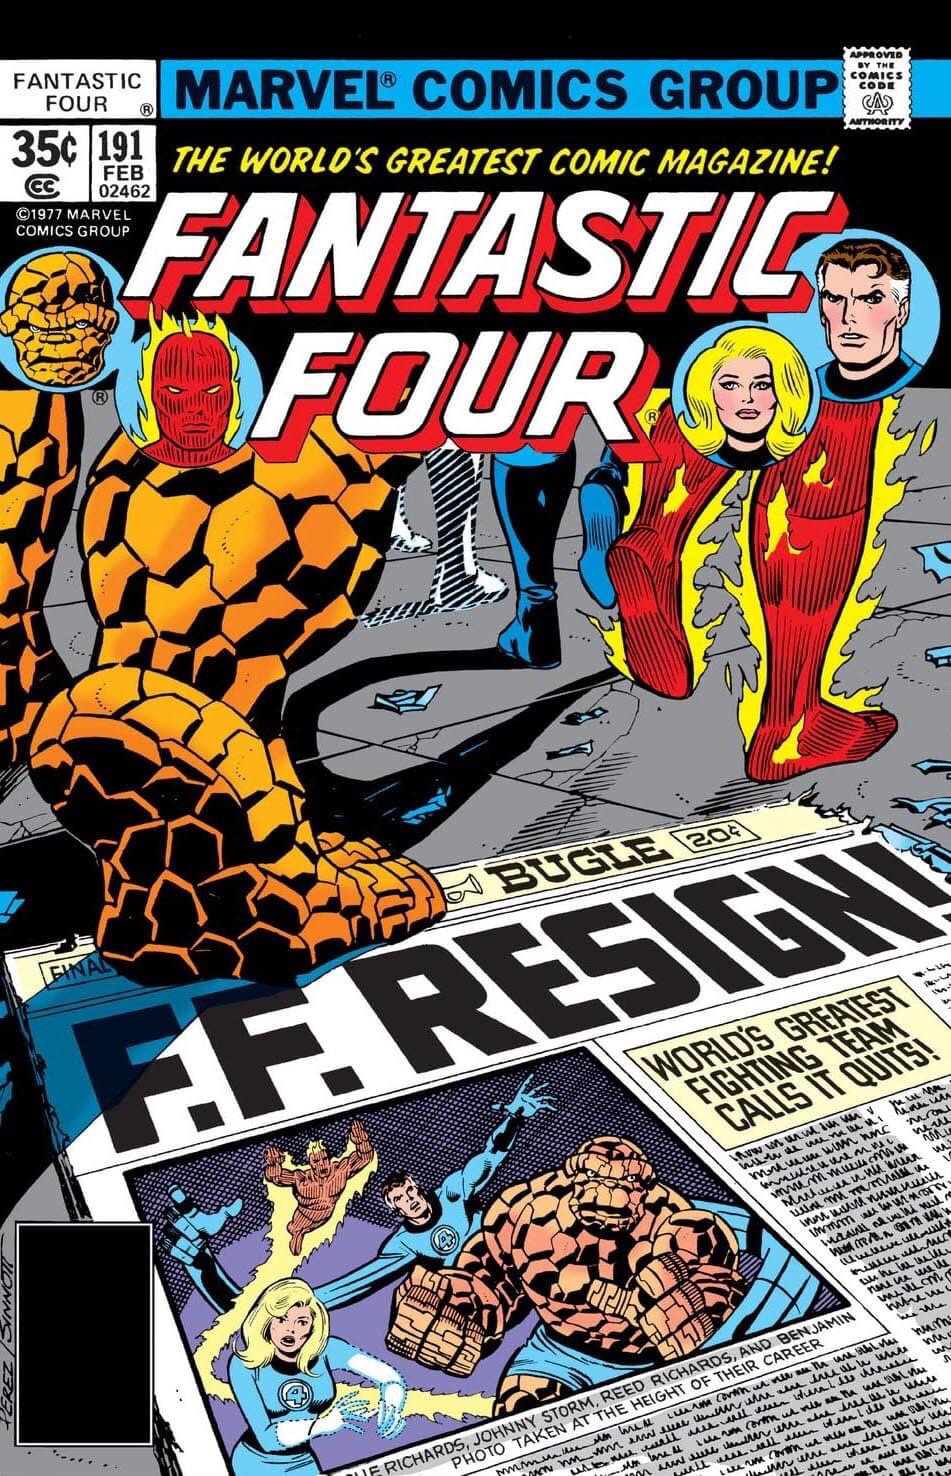 Fantastic Four #191 - Cover